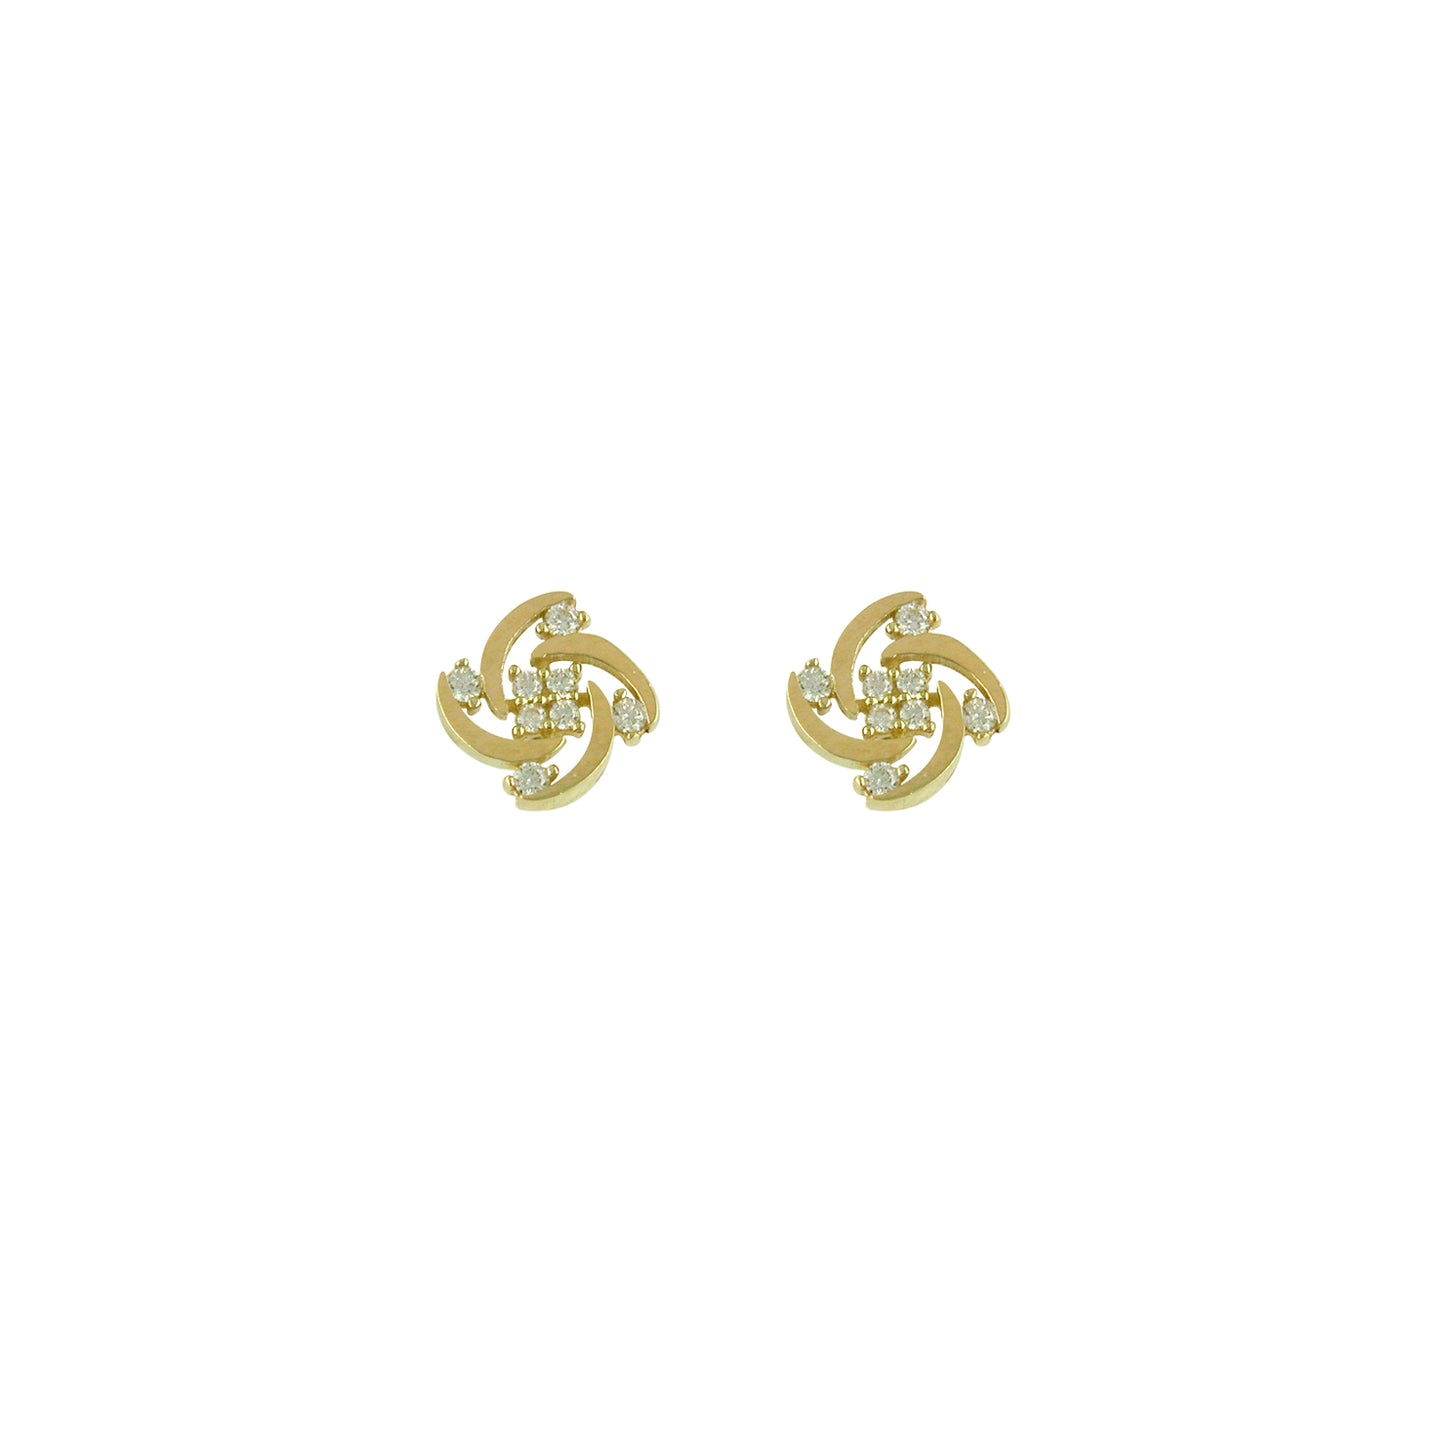 9ct Gold Celtic CZ Knot Earrings